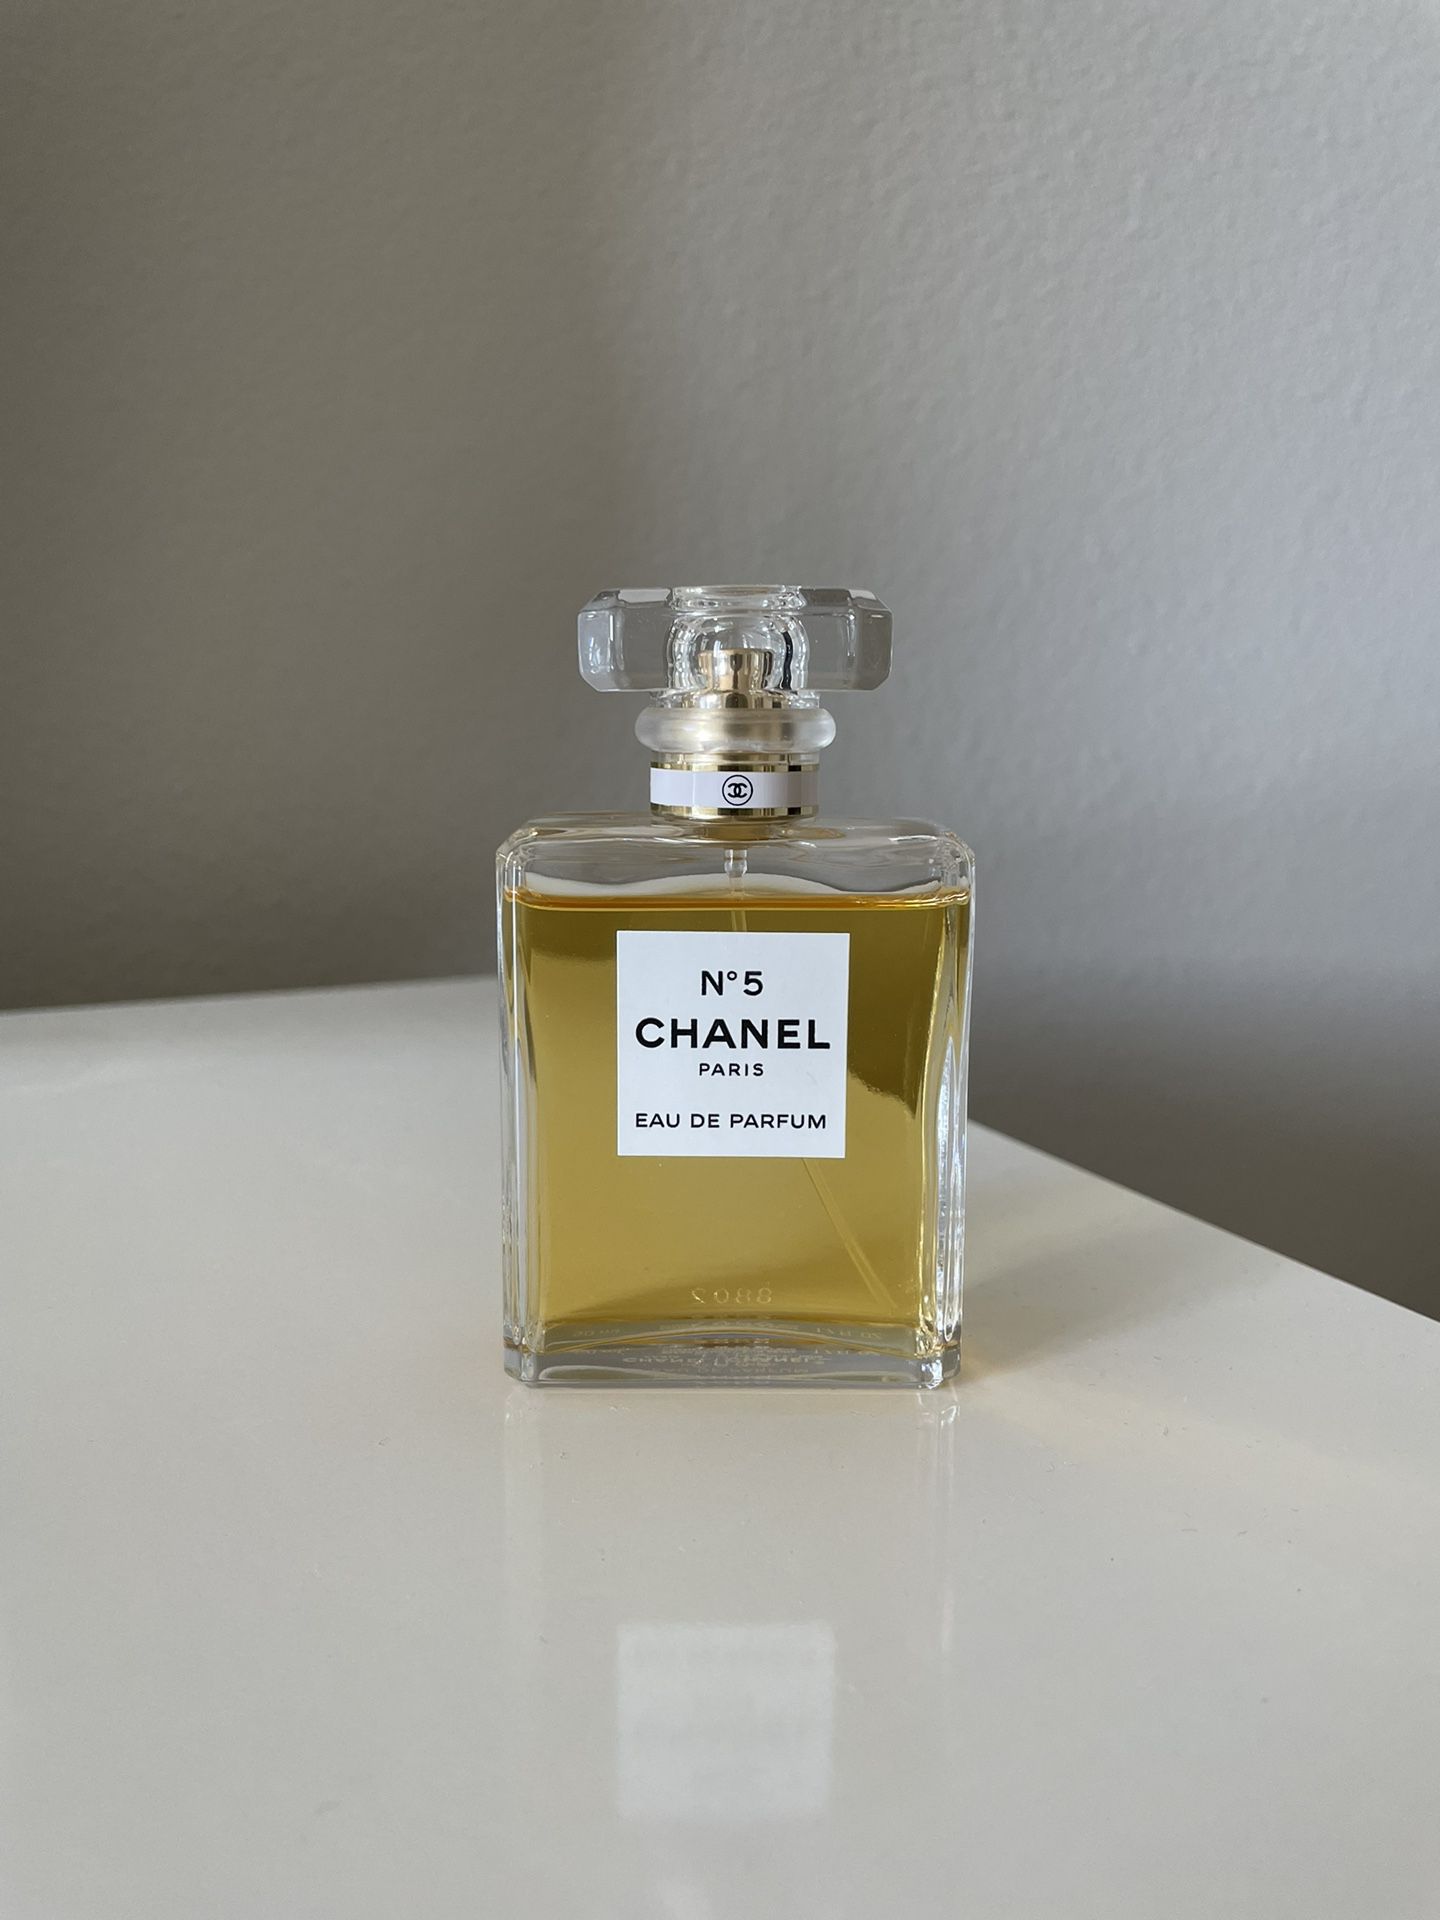 Chanel N5 Paris 1.7 oz Woman Perfume